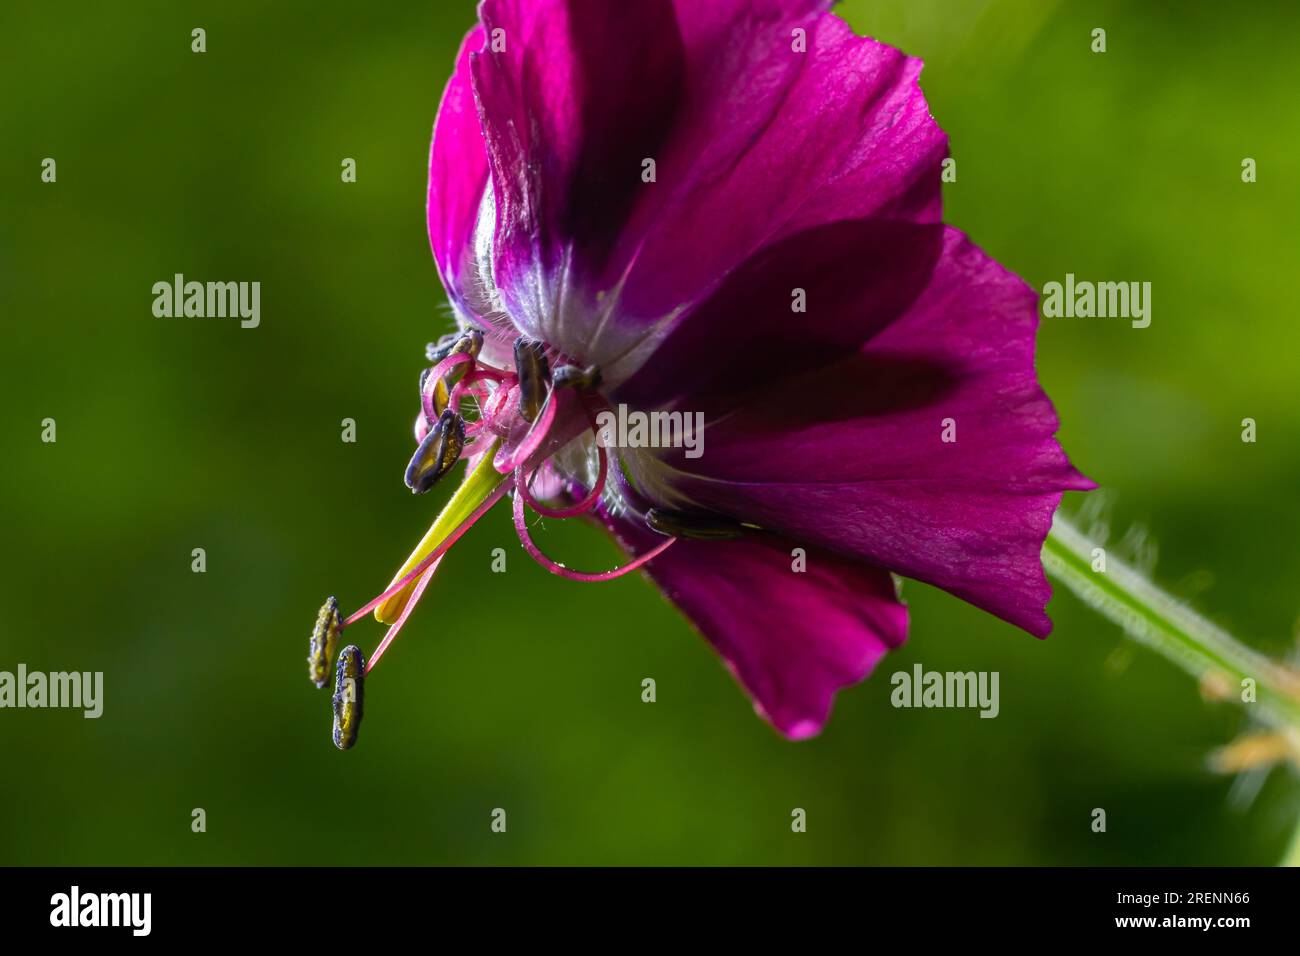 Dark purple dusky flowers in the garden, selective focus with green bokeh background - Geranium faeum. Stock Photo